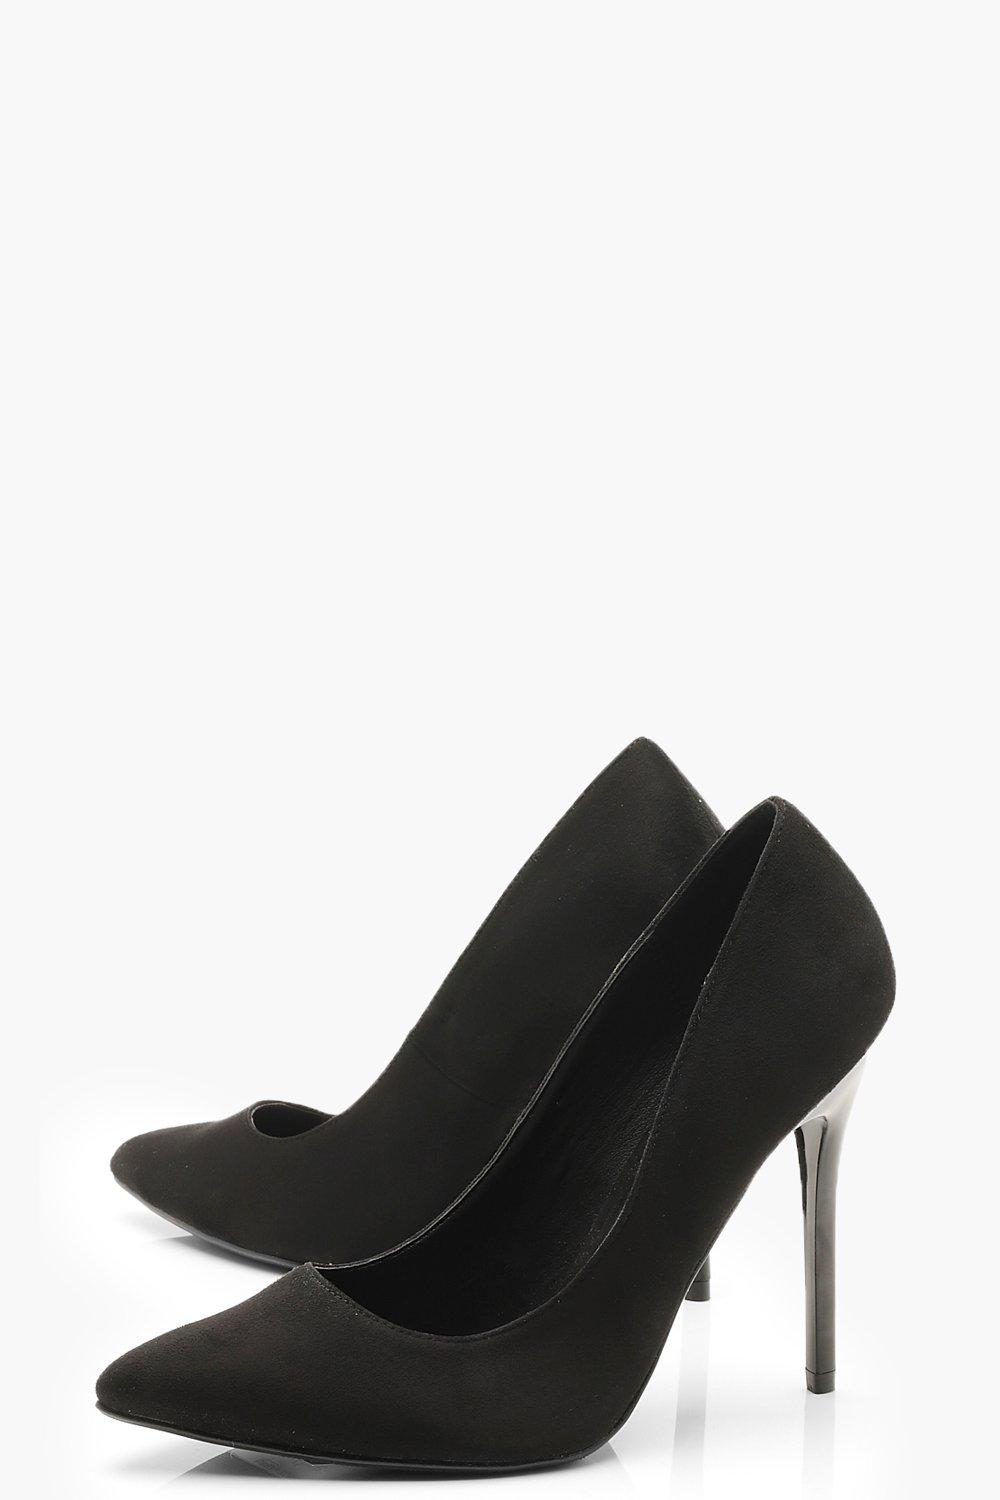 wide fit black stiletto heels